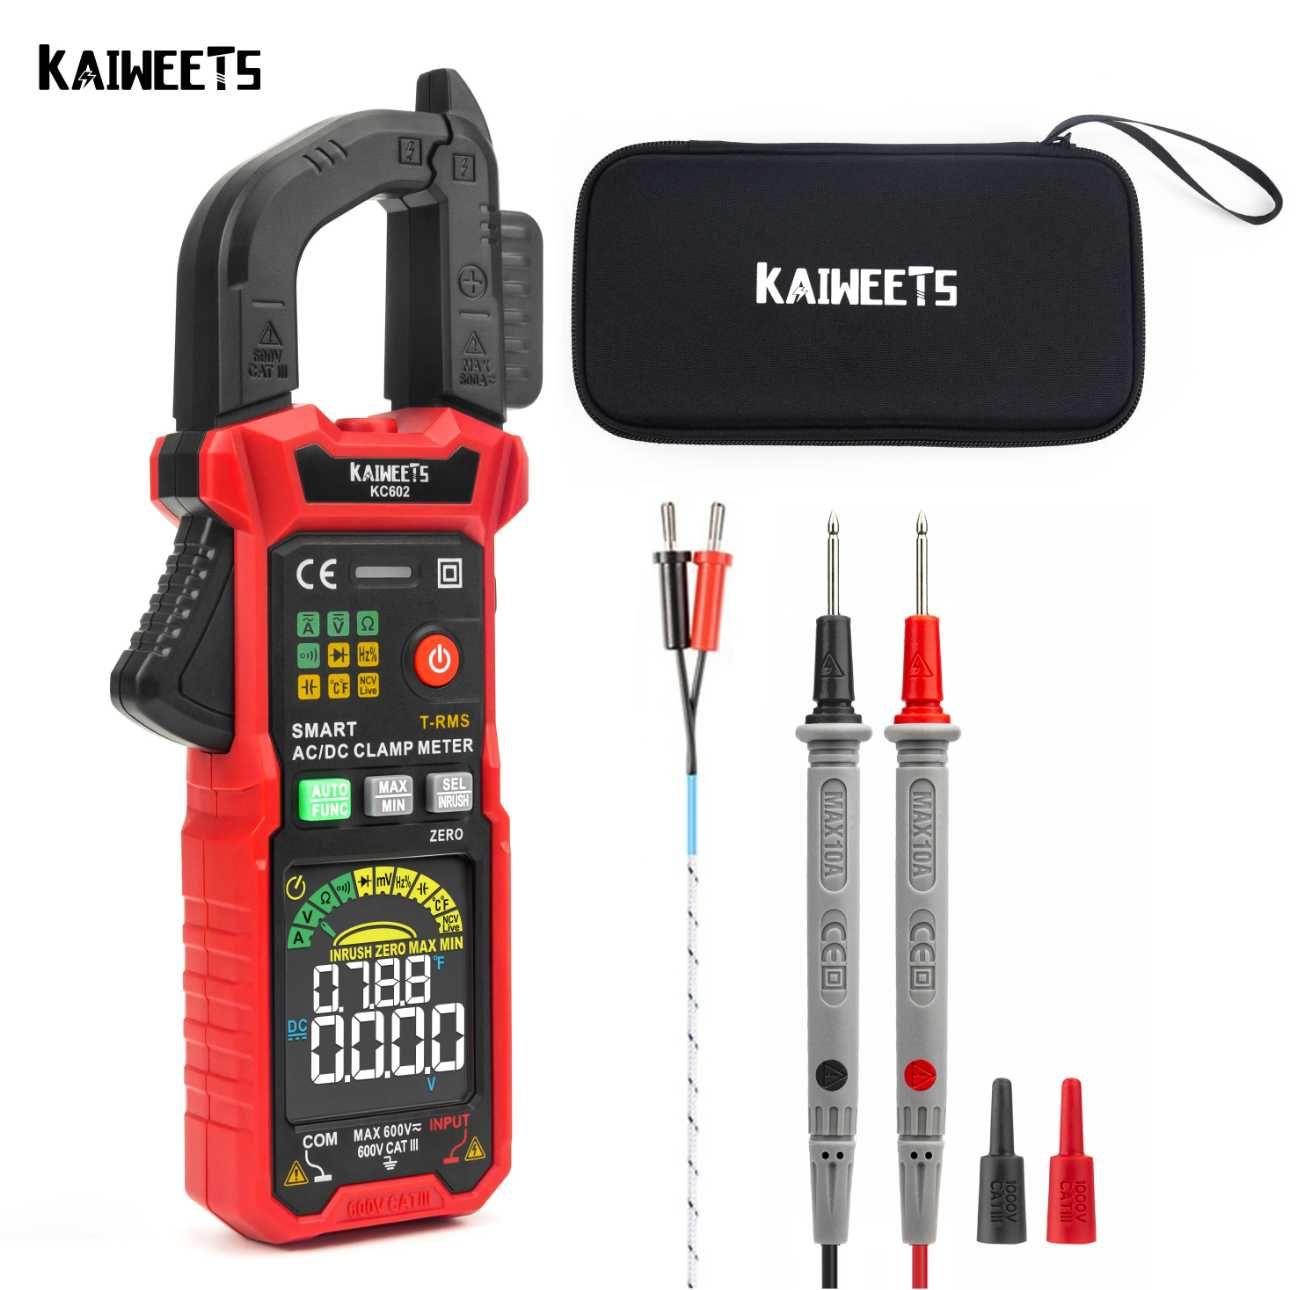 Мультиметр токовые клещи — KAIWEETS KC602, KAIWEETS HT200B